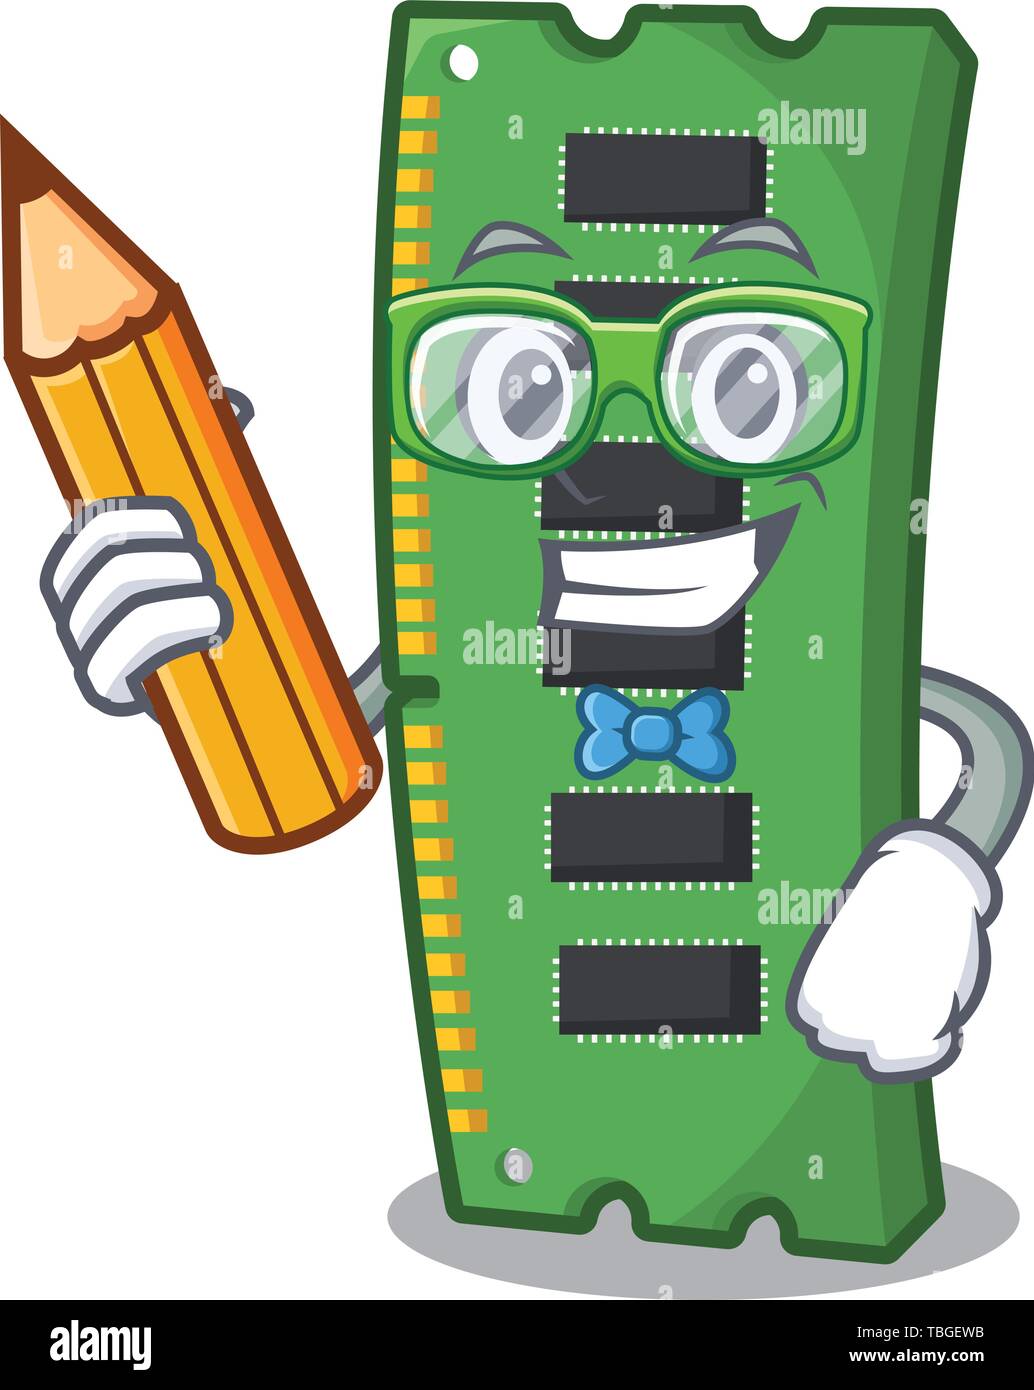 Student RAM memory card the mascot shape Stock Vector